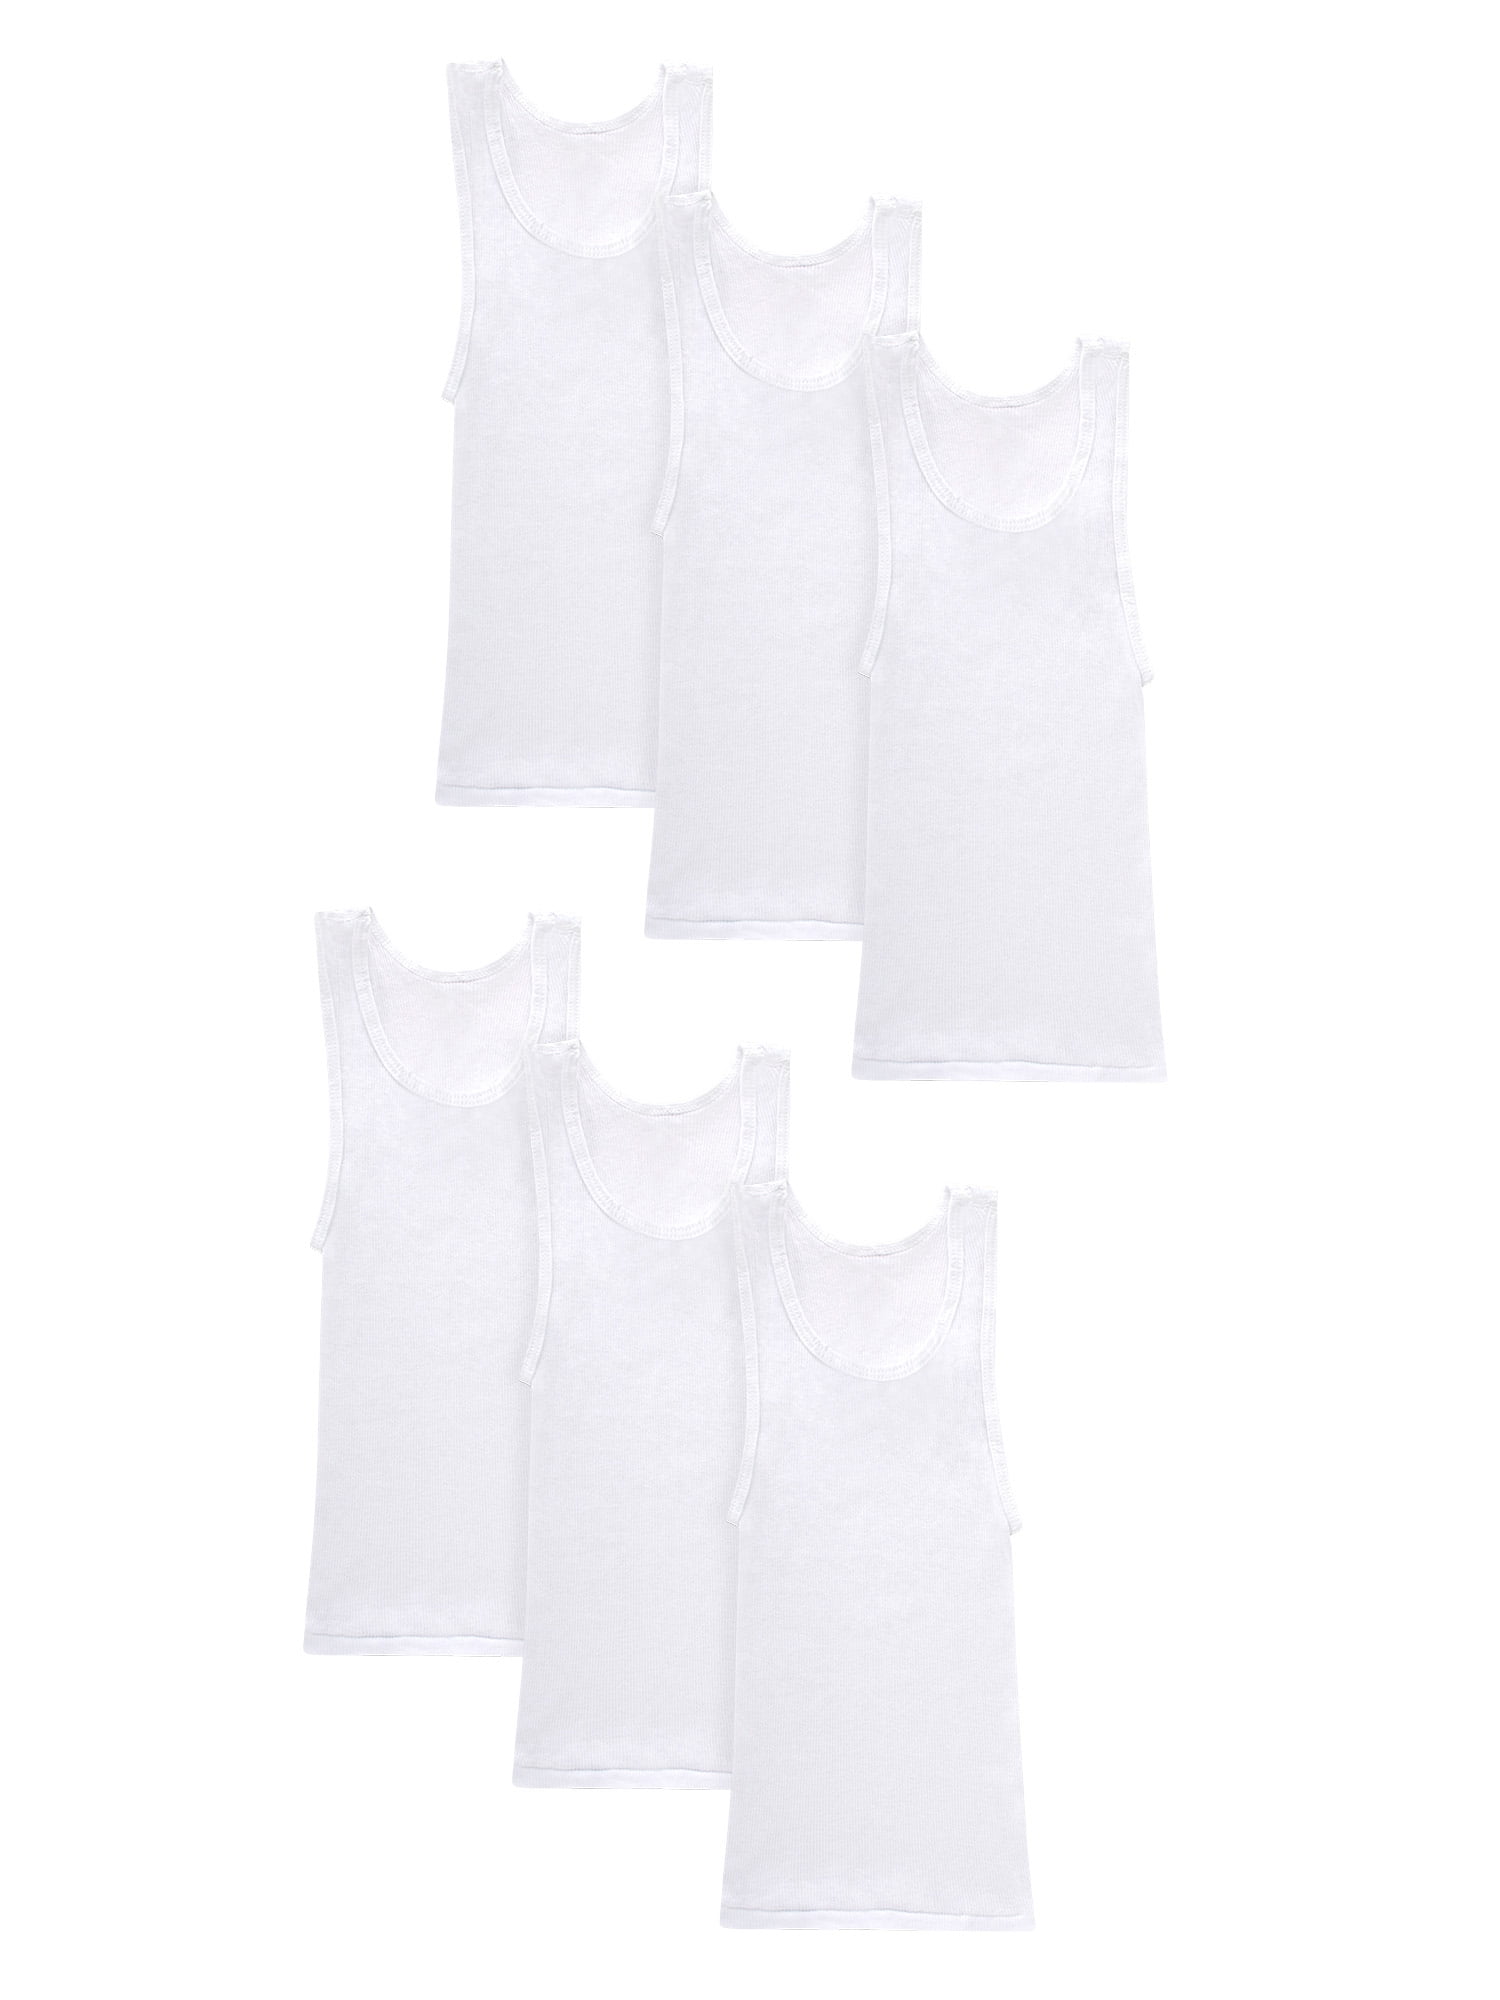 Hanes Boys' White Tank Undershirts, 5+1 Bonus Pack - Walmart.com